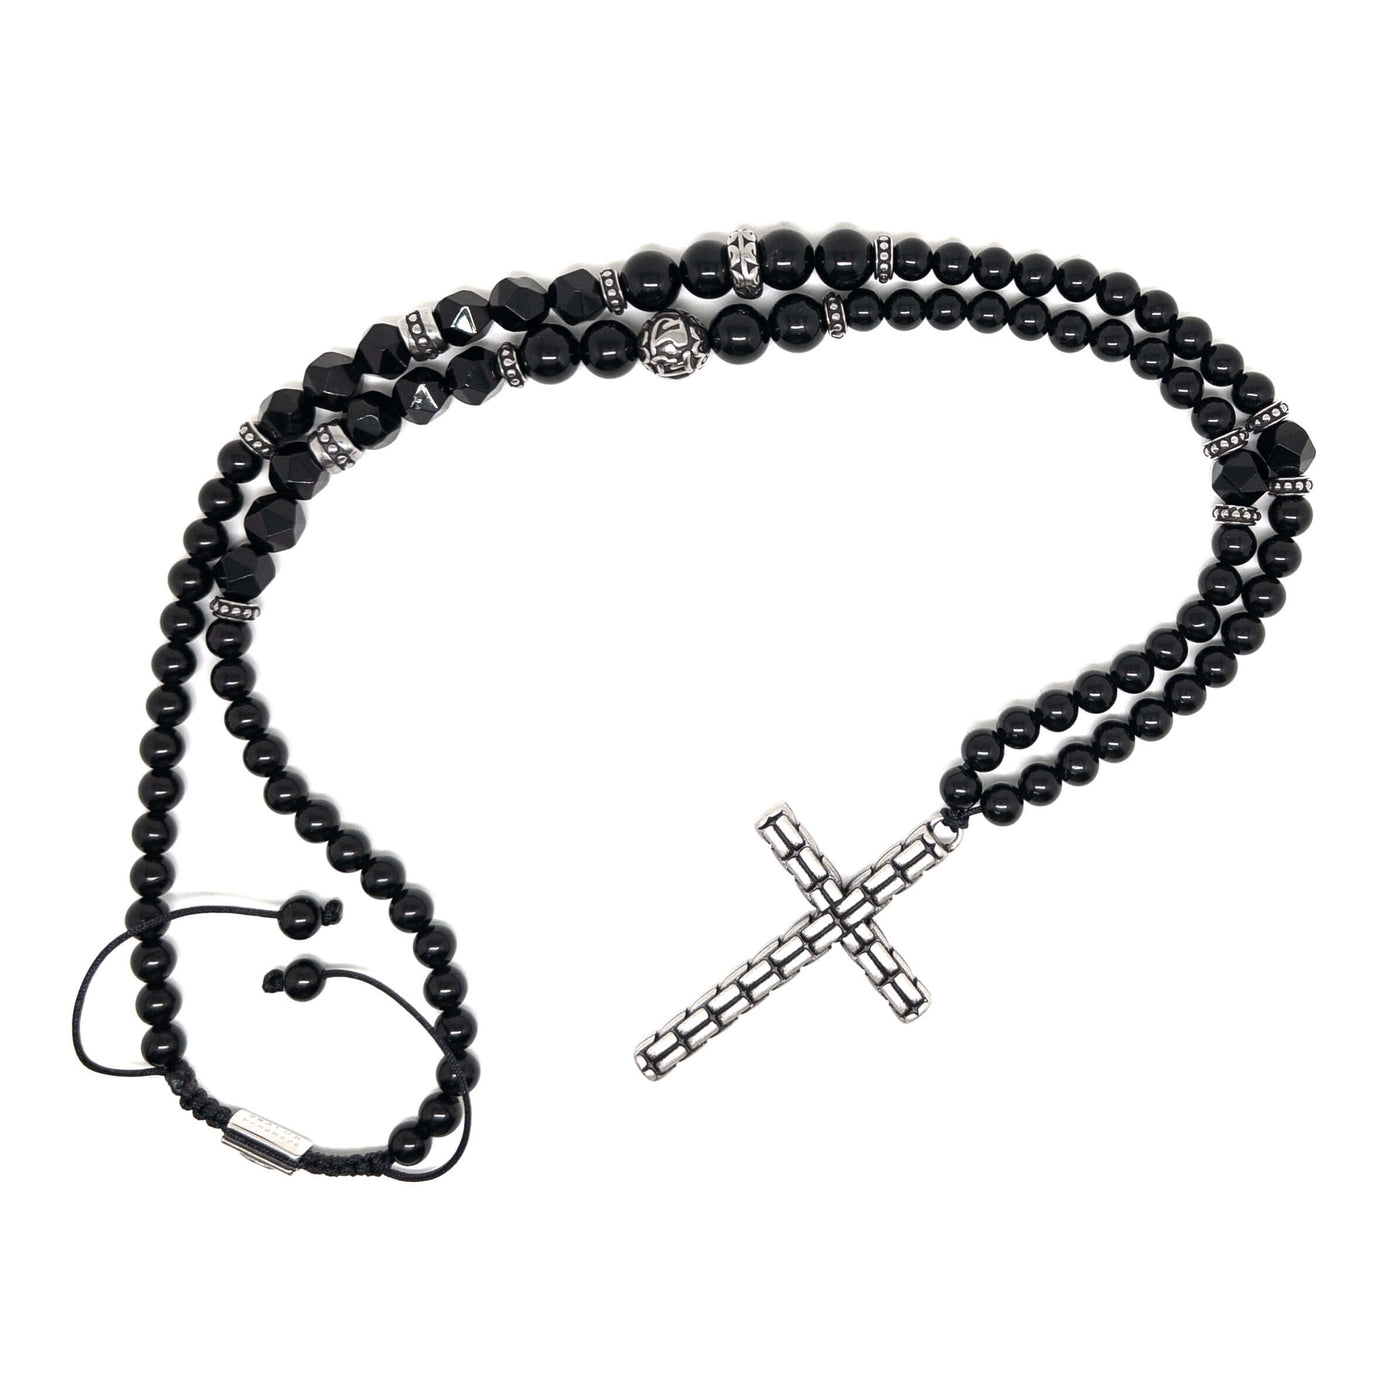 The Obsidian Vintage Necklace